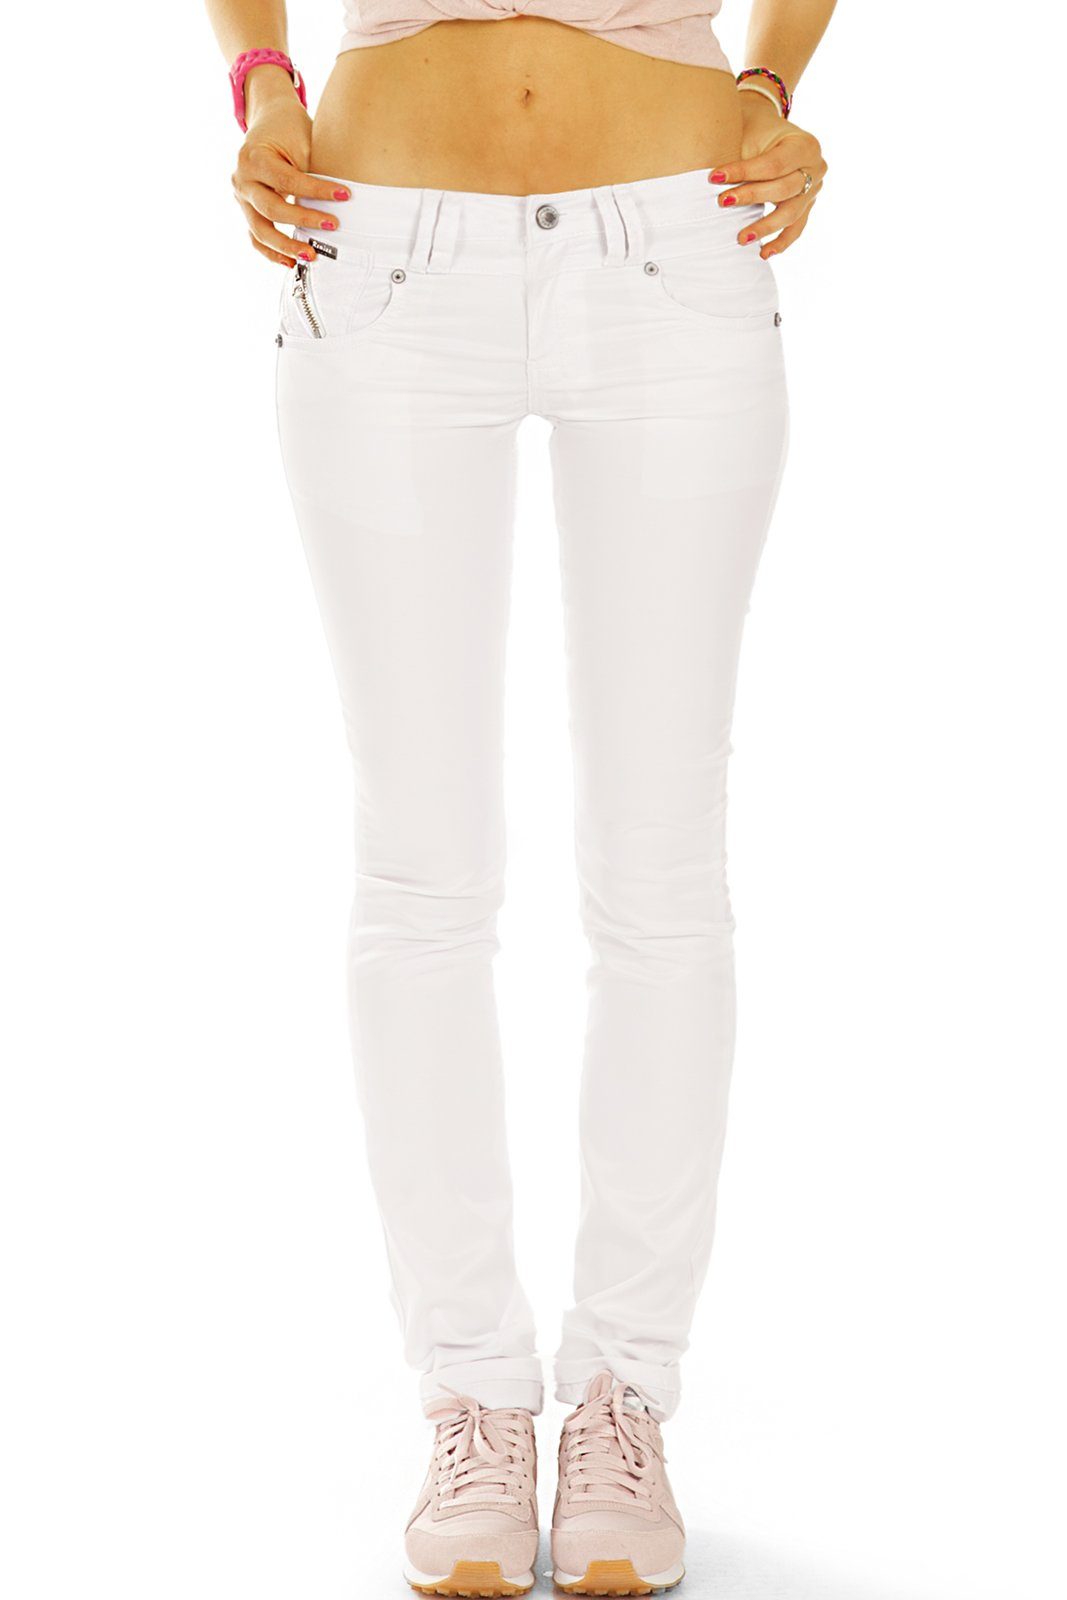 be styled Stoffhose »Skinny Röhrenhose Stretch Fit in weiß low waist Jeans-  Damen - j3k-1« unifarben online kaufen | OTTO